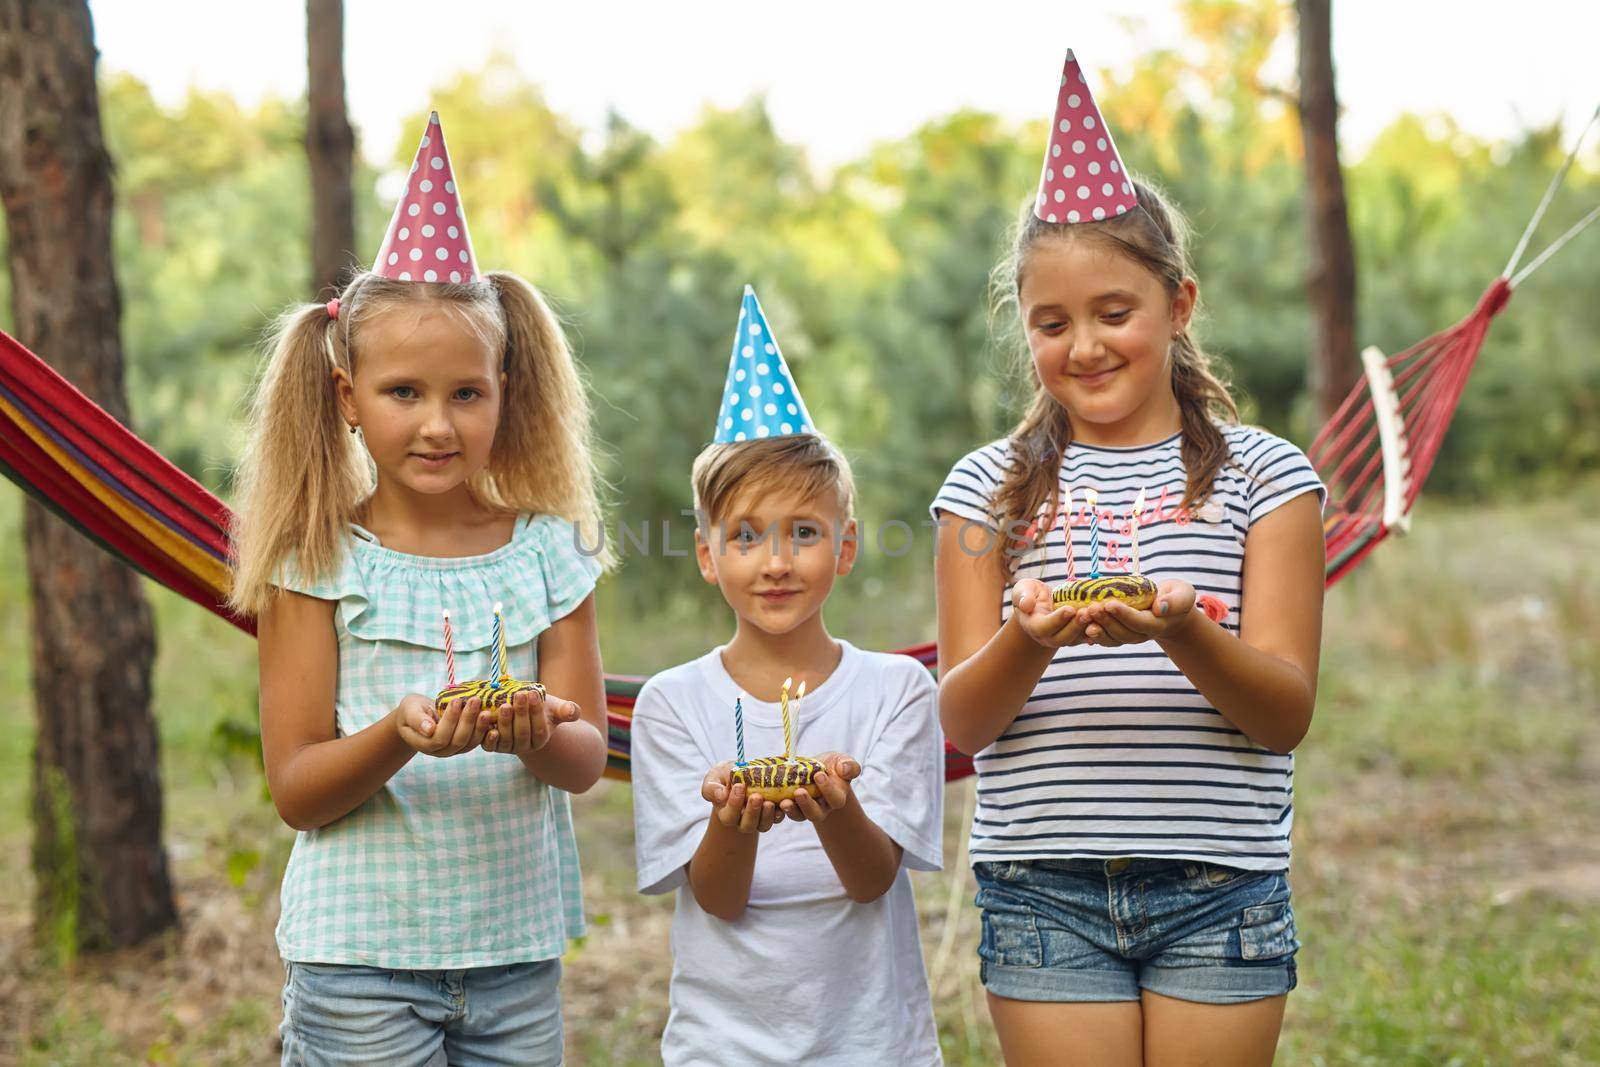 Boy and girls celebrating birthday outdoor in the garden by InnaVlasova